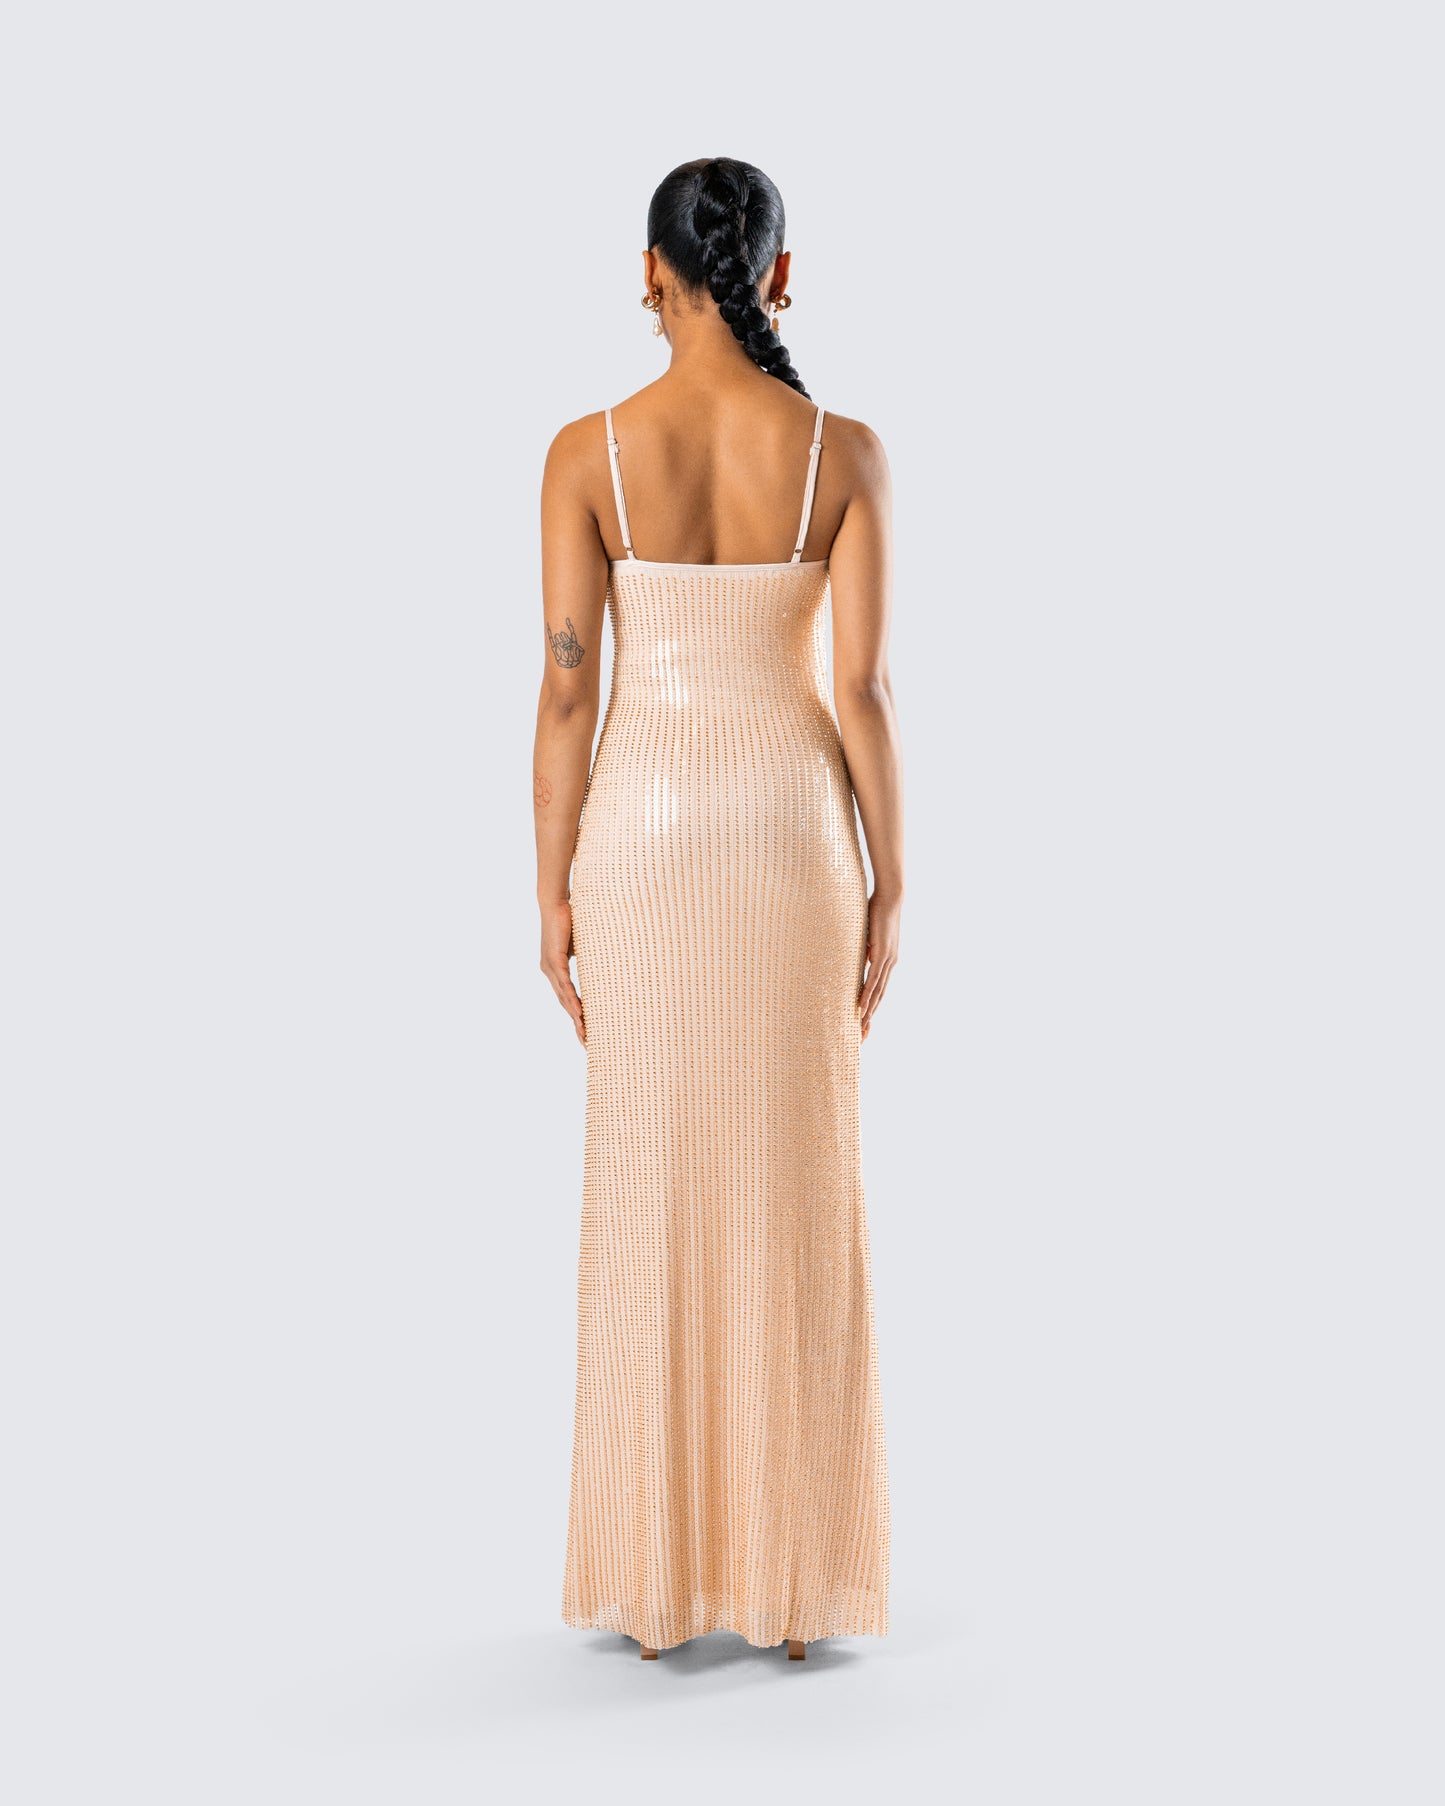 Michal Gold Sequin Maxi Dress